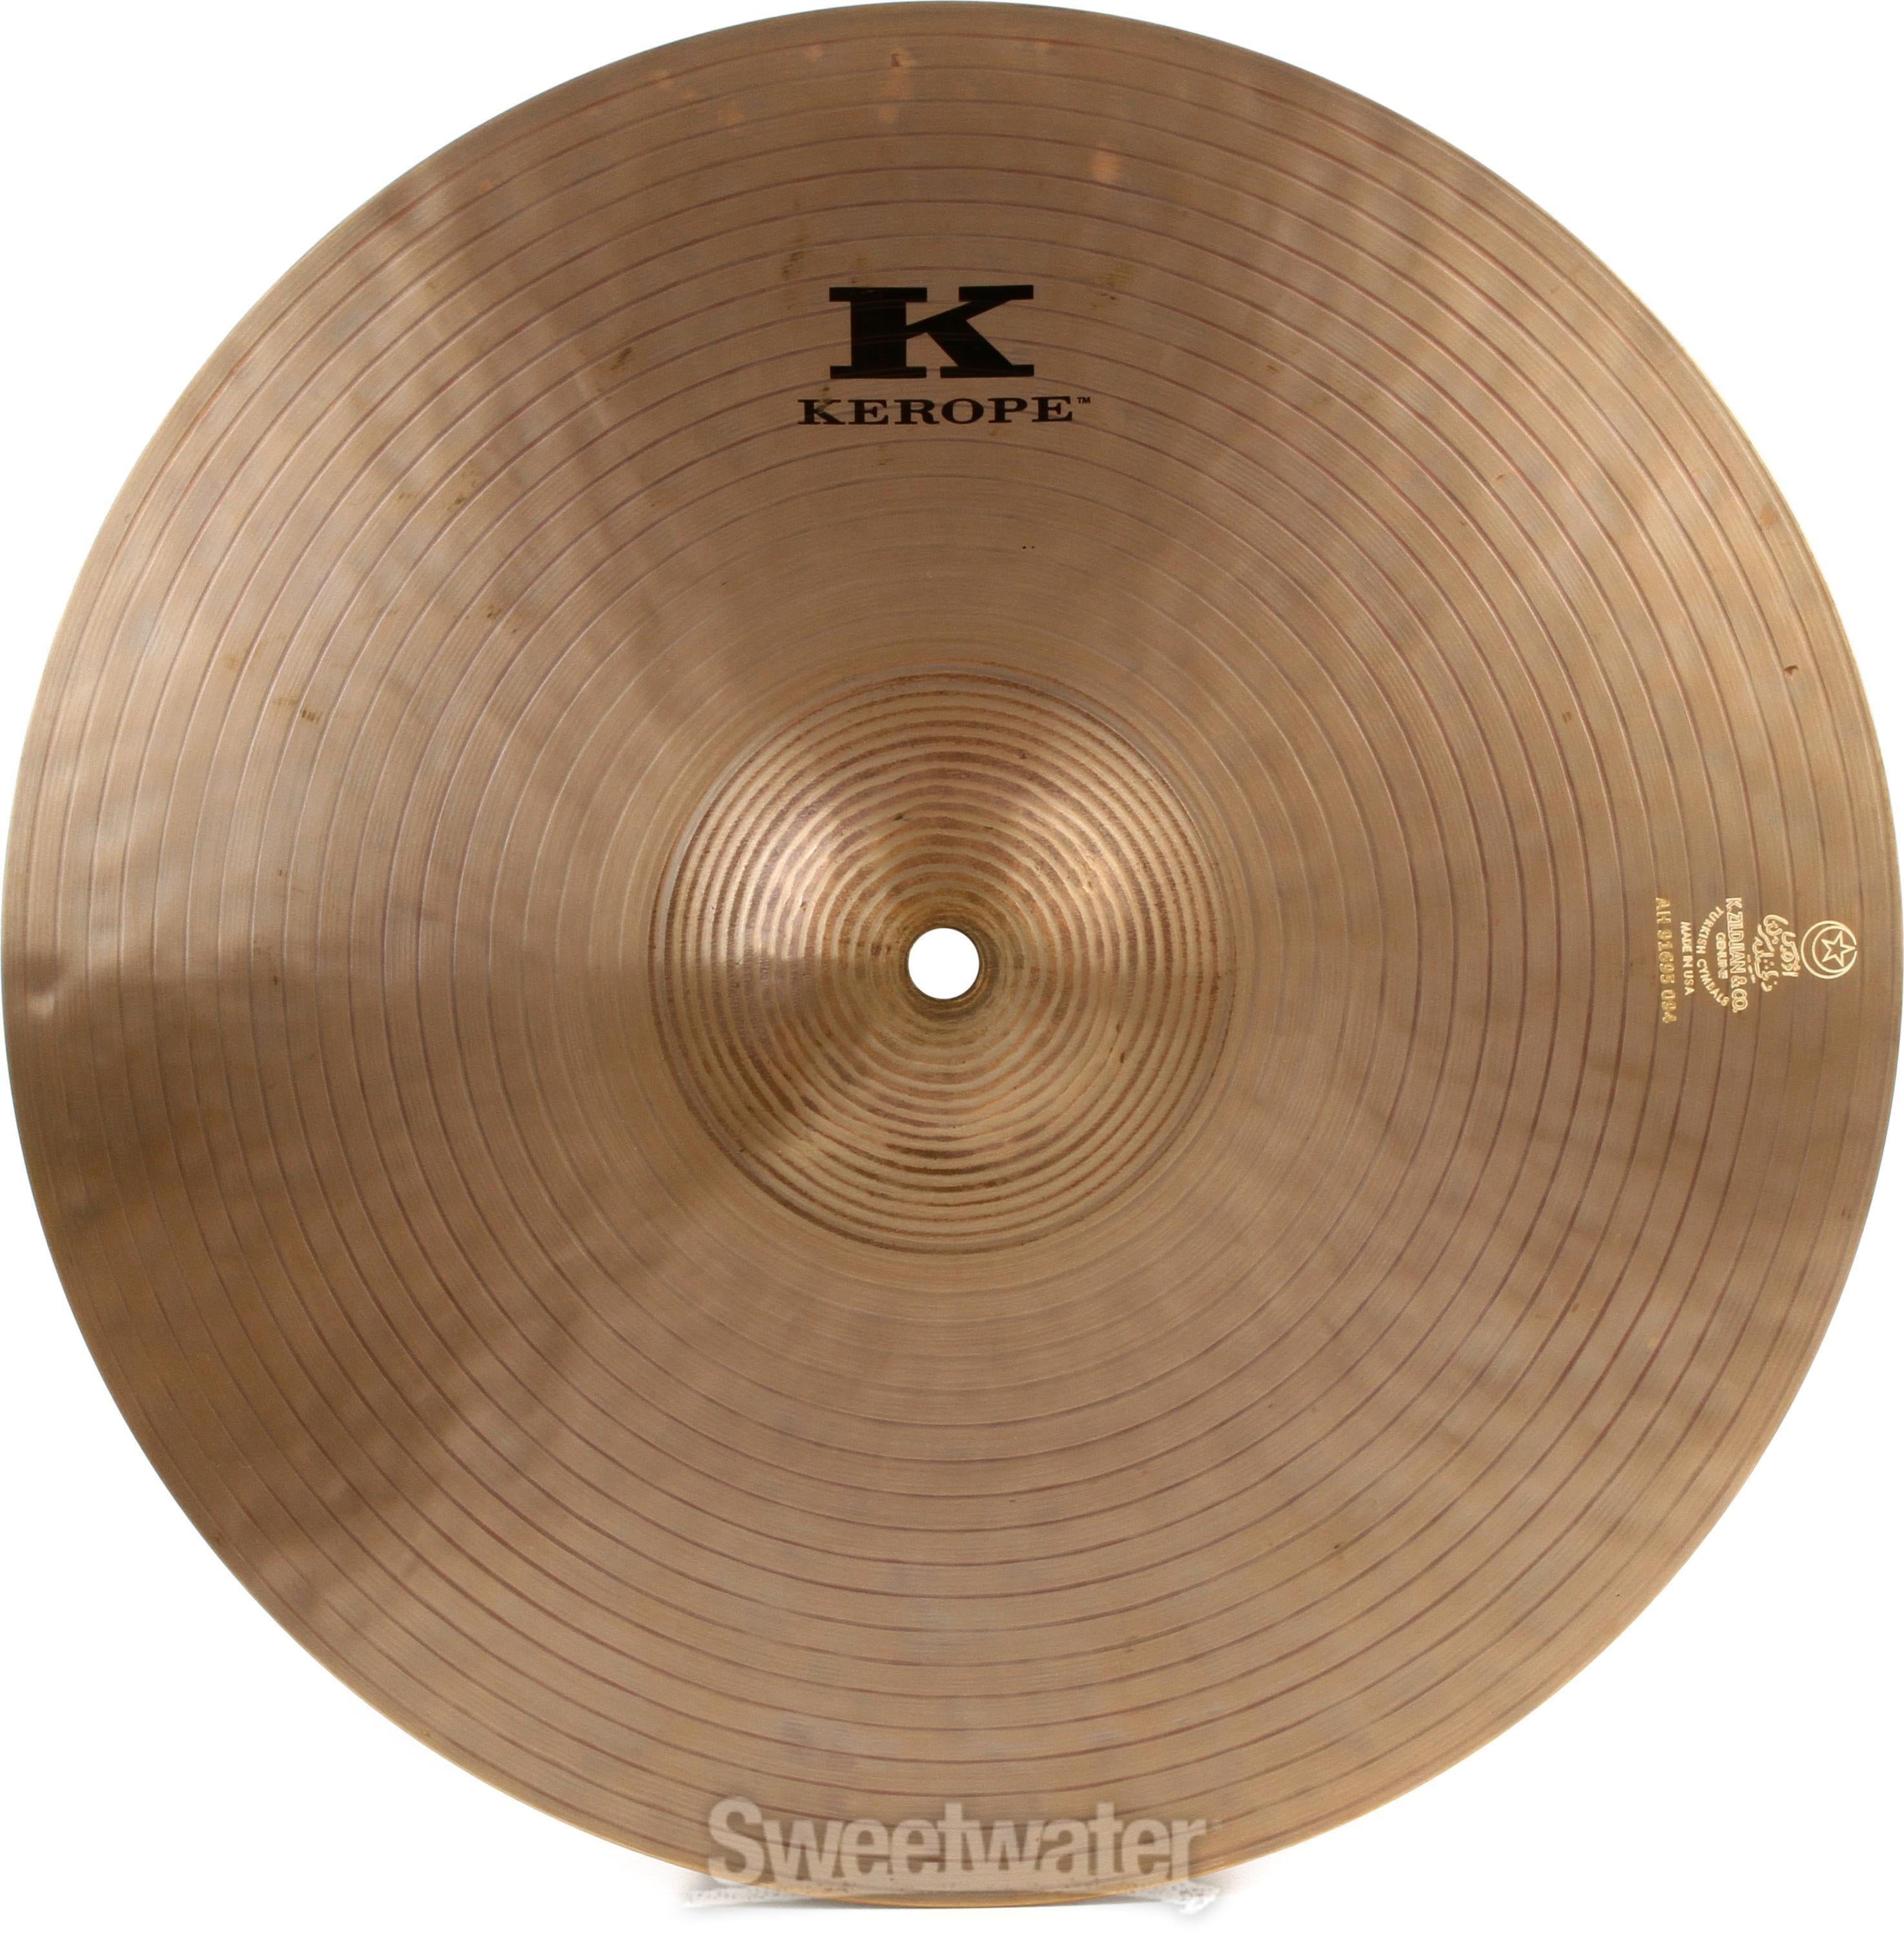 Zildjian 14 inch Kerope Hi-hat Cymbals | Sweetwater